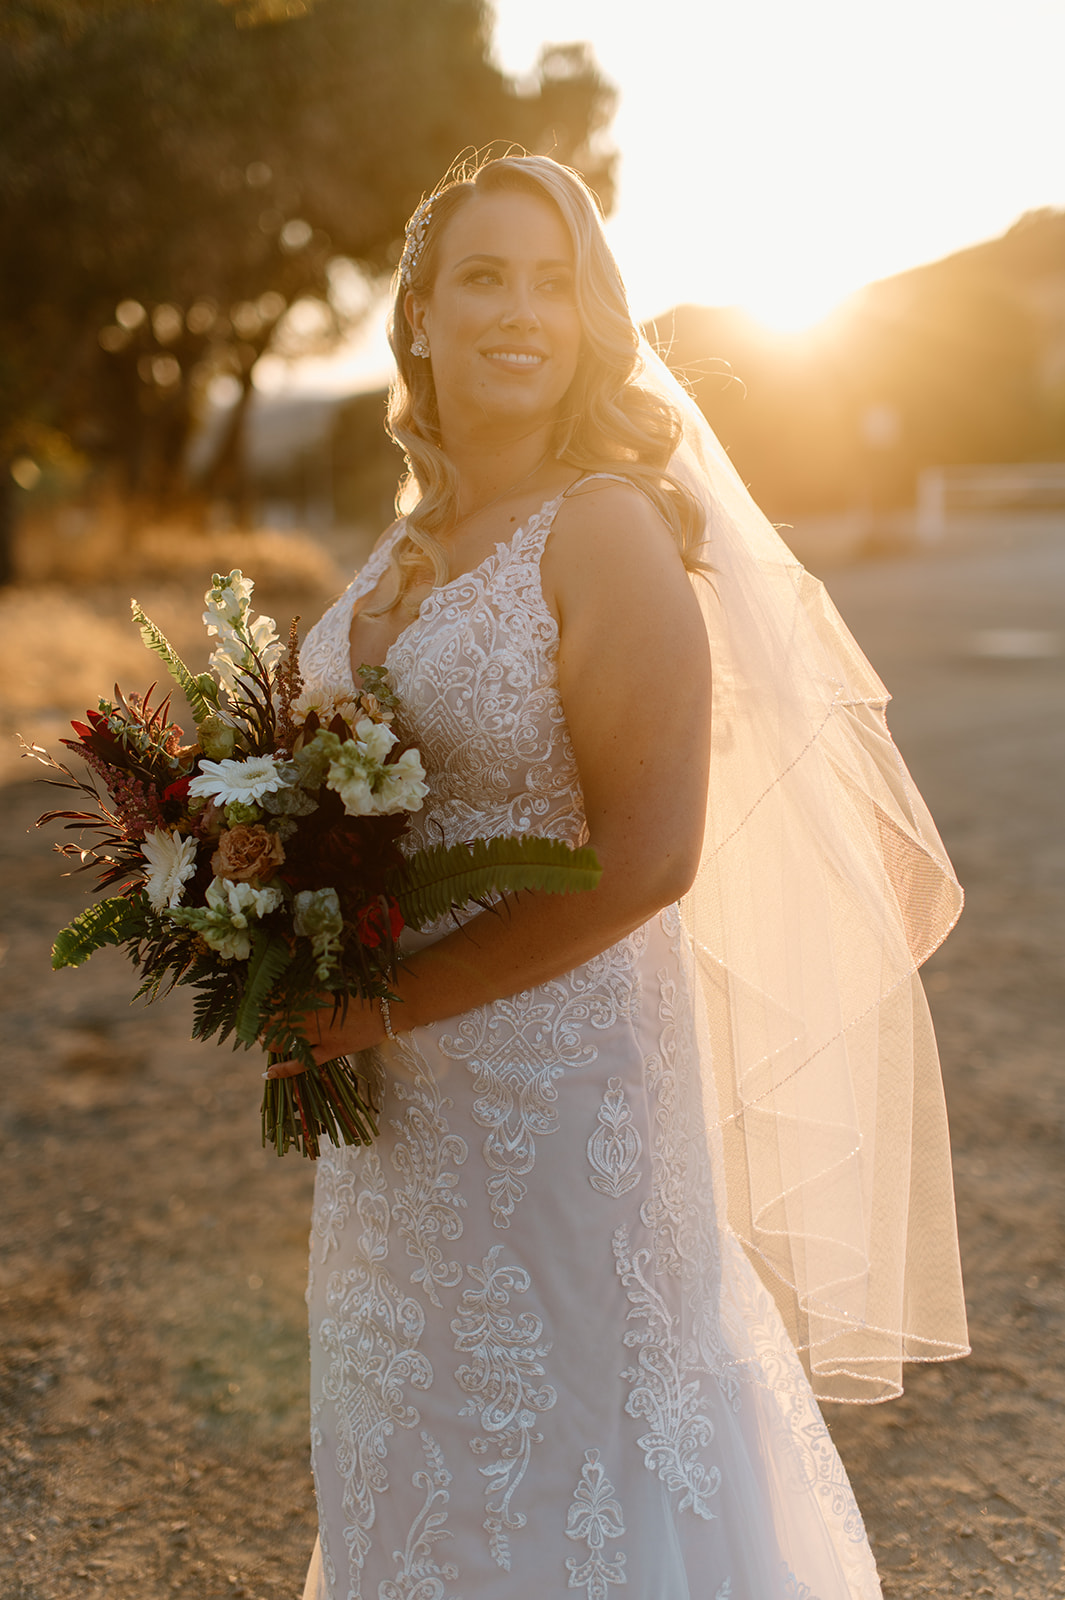 Sydney Jai Photography - Sunol valley wedding photography,  northern california photographer, bride and groom photos, golden hour wedding photos